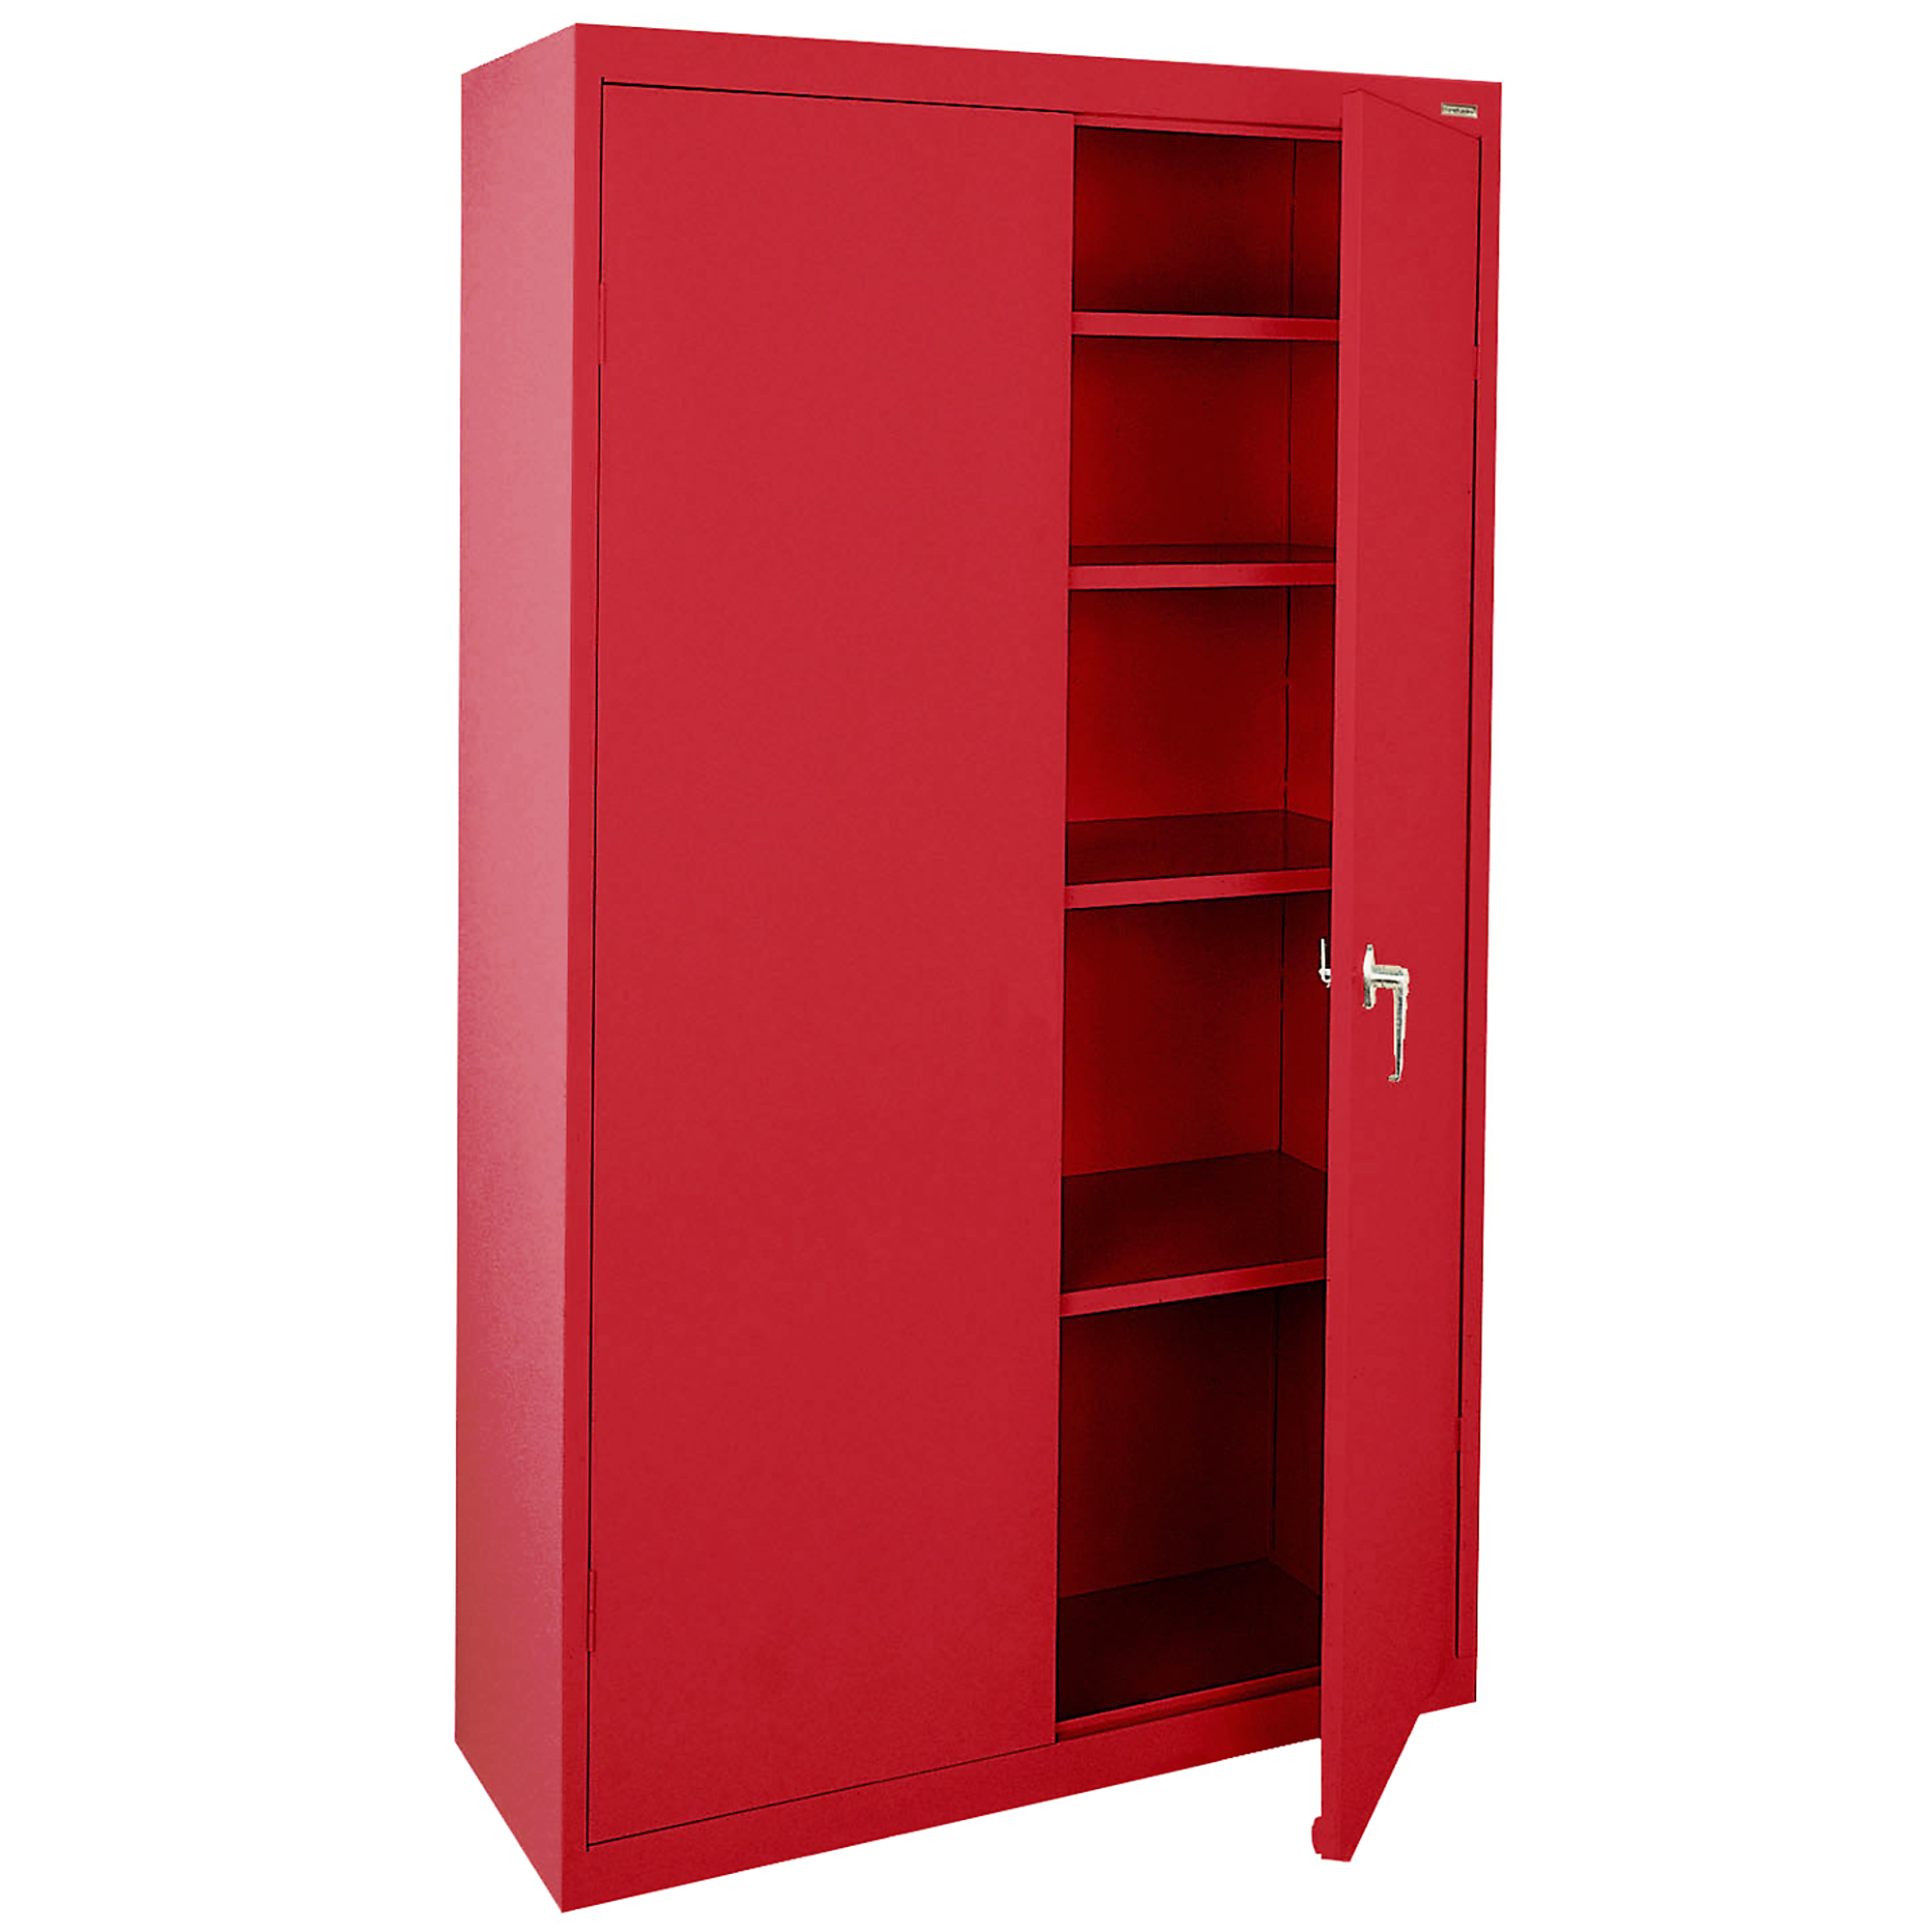 Sandusky Lee Sandusky, Value Line Cabinet 36x18x72 Red, Height 72 in, Width 36 in, Color Red, Model VF41361872-01